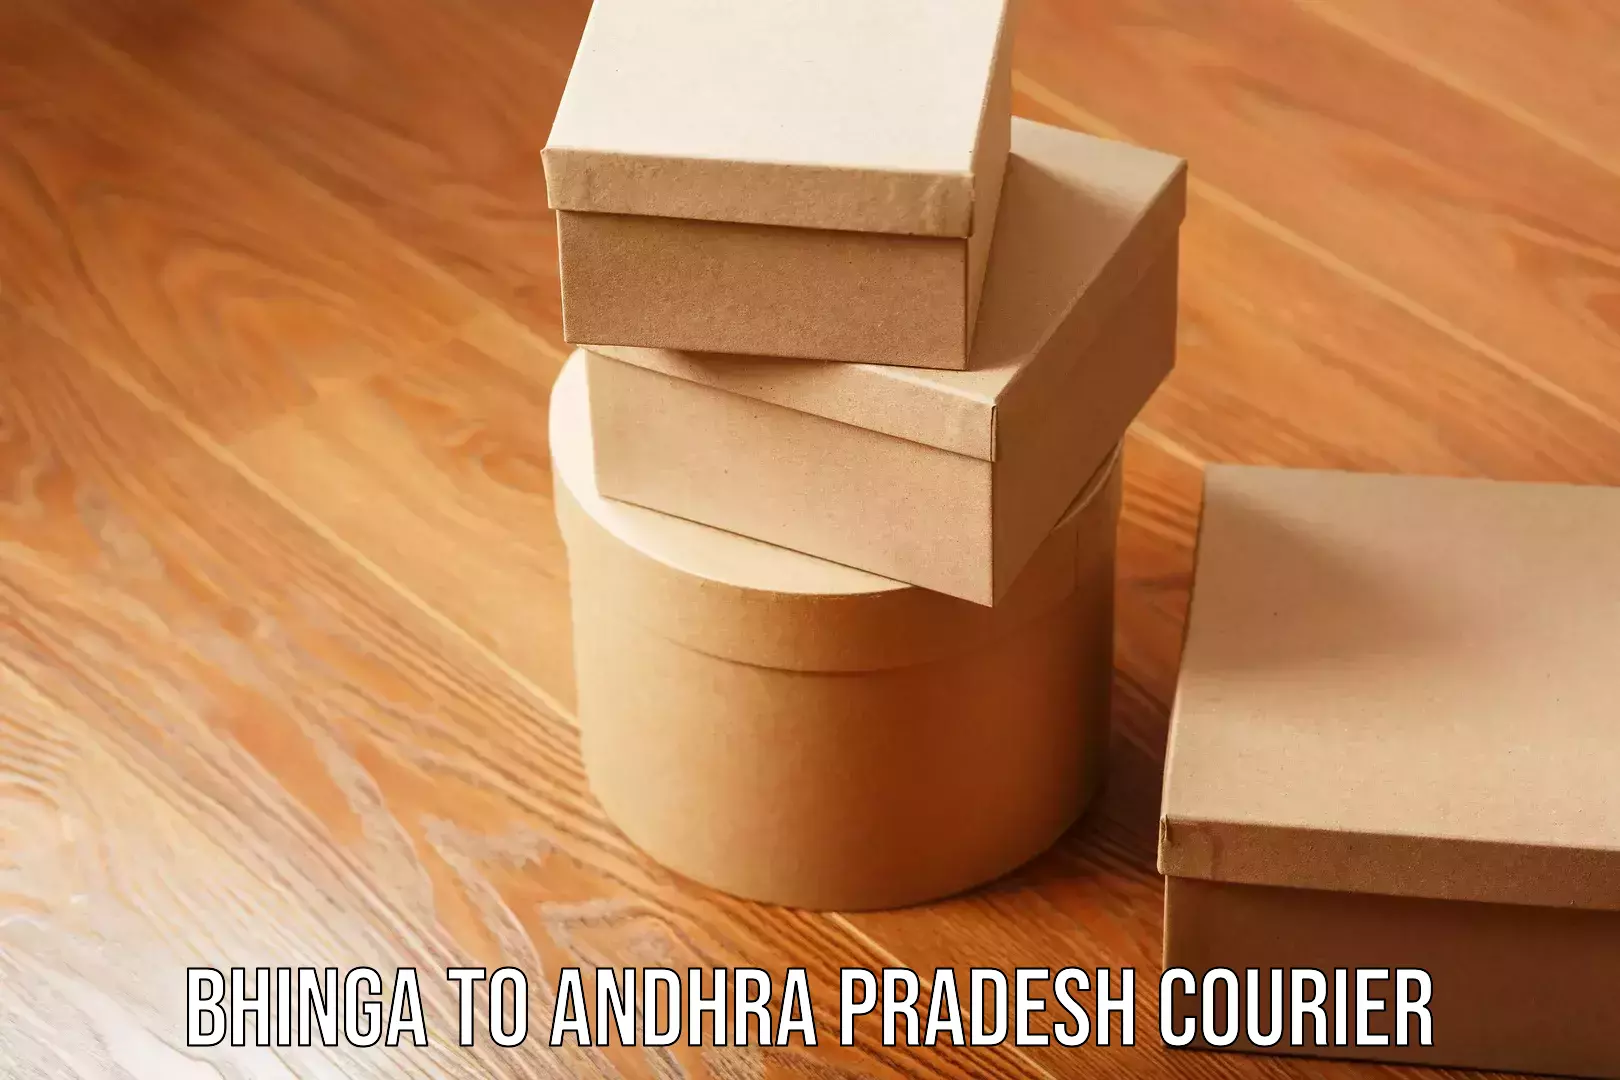 Logistics service provider Bhinga to Andhra Pradesh